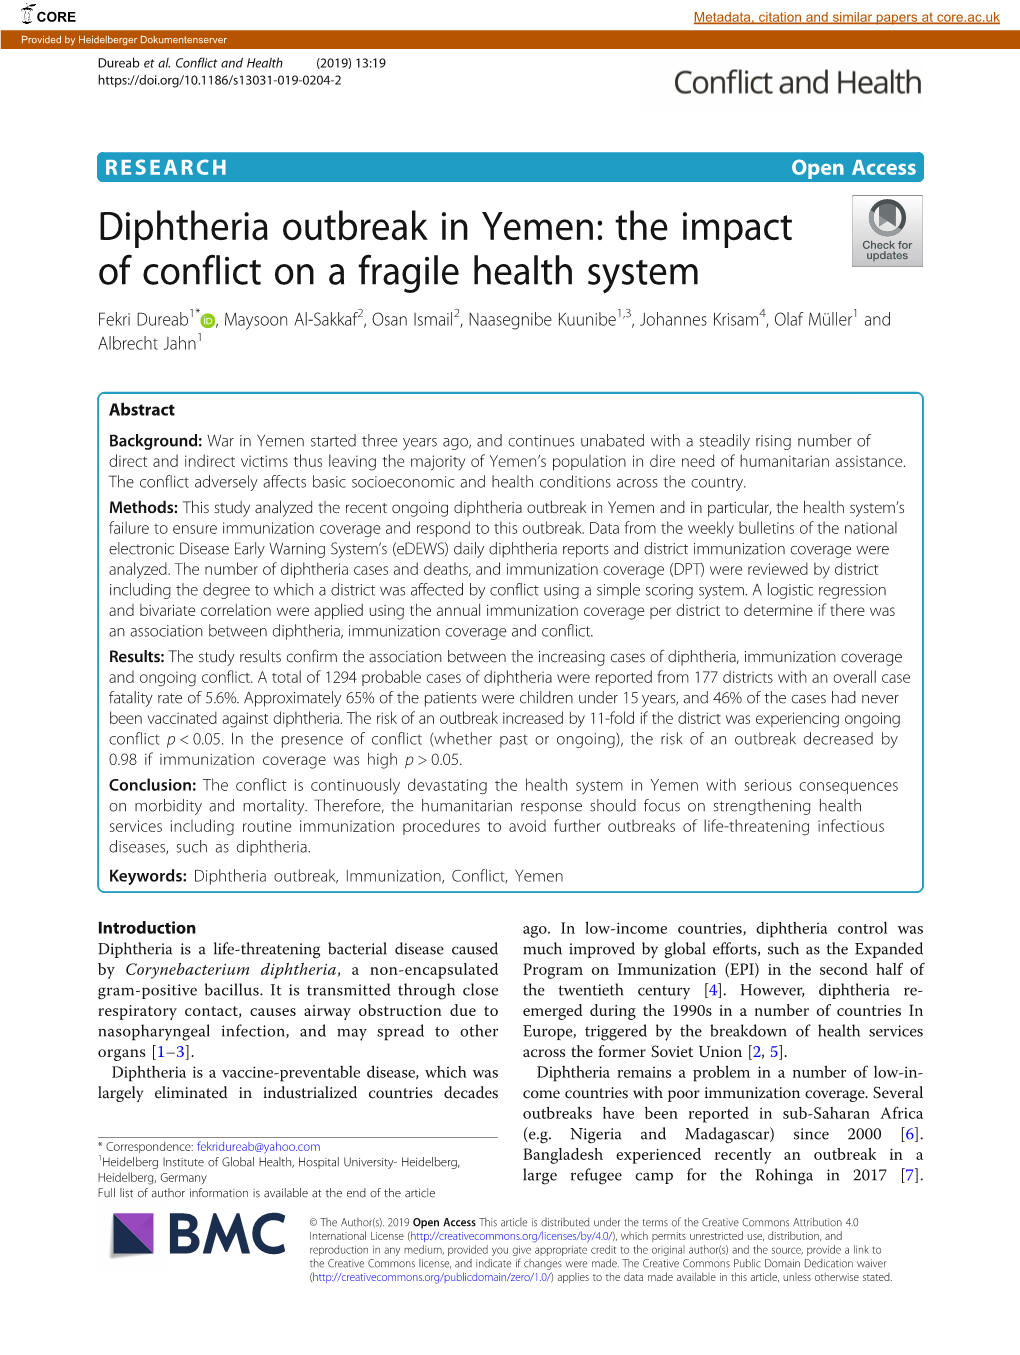 Diphtheria Outbreak in Yemen